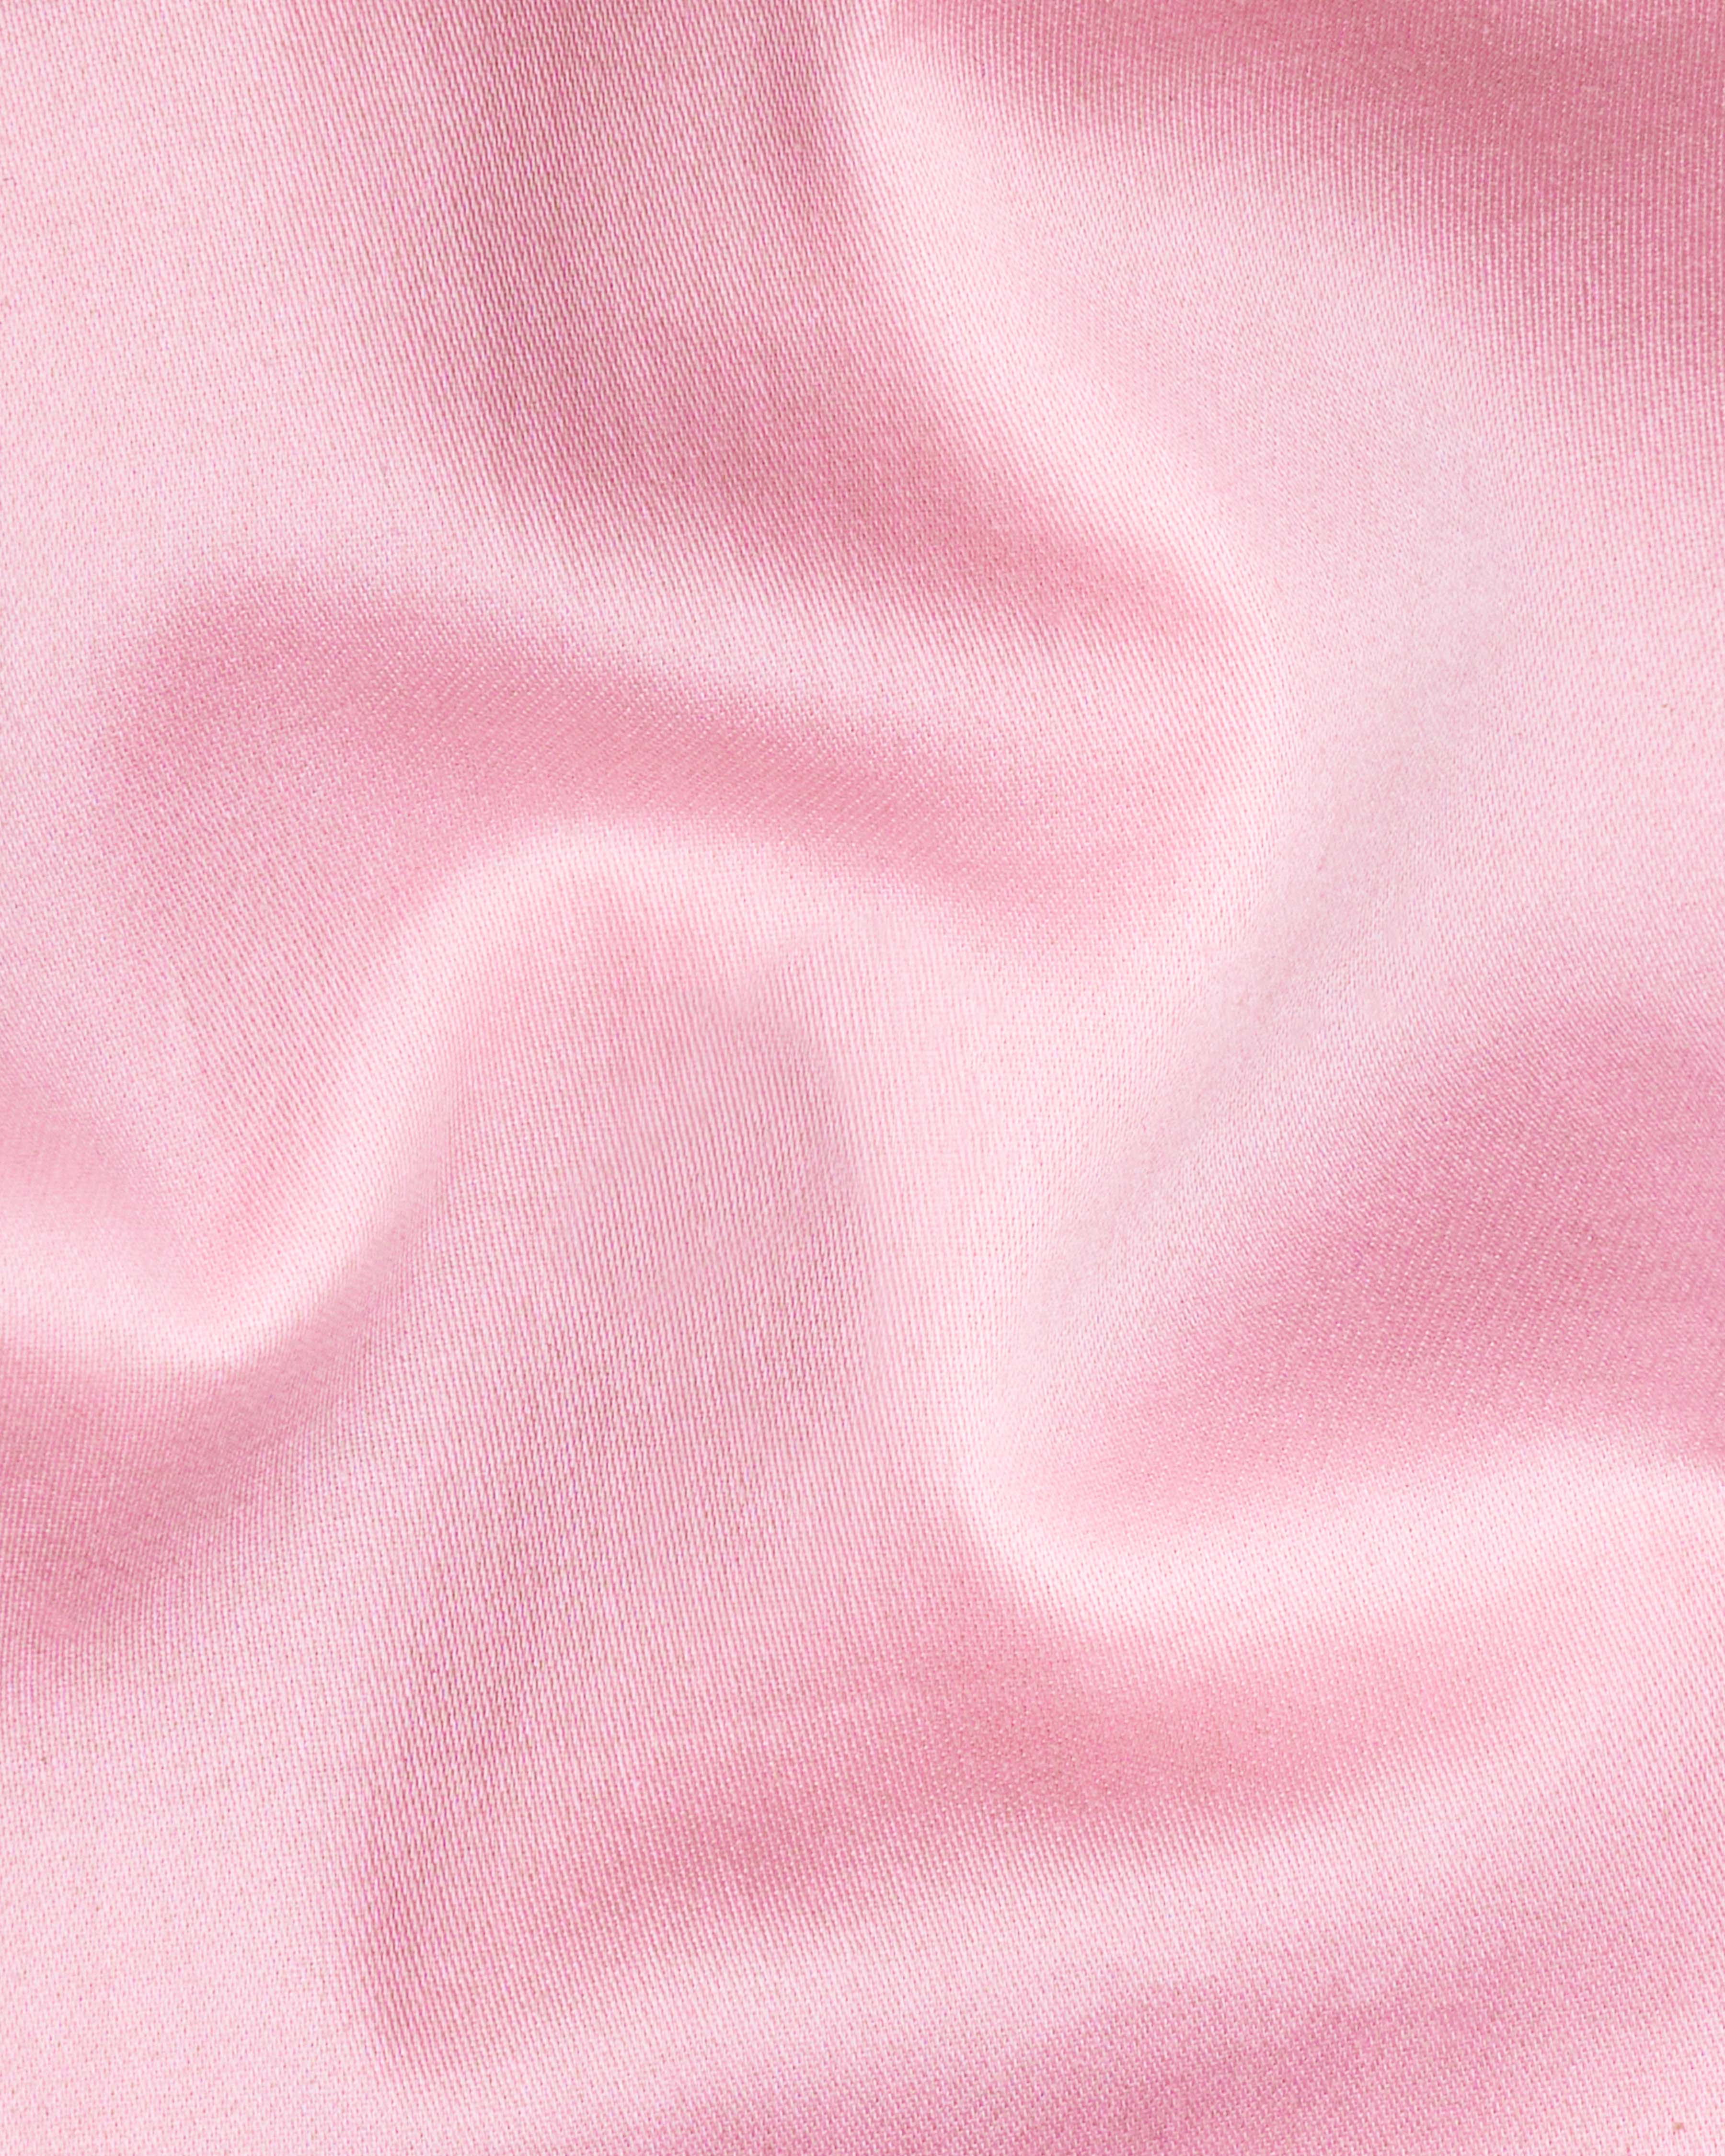 Pastel Pink Snake Pleated Super Soft Premium Cotton Tuxedo Shirt  8682-BLK-TXD-38,8682-BLK-TXD-H-38,8682-BLK-TXD-39,8682-BLK-TXD-H-39,8682-BLK-TXD-40,8682-BLK-TXD-H-40,8682-BLK-TXD-42,8682-BLK-TXD-H-42,8682-BLK-TXD-44,8682-BLK-TXD-H-44,8682-BLK-TXD-46,8682-BLK-TXD-H-46,8682-BLK-TXD-48,8682-BLK-TXD-H-48,8682-BLK-TXD-50,8682-BLK-TXD-H-50,8682-BLK-TXD-52,8682-BLK-TXD-H-52